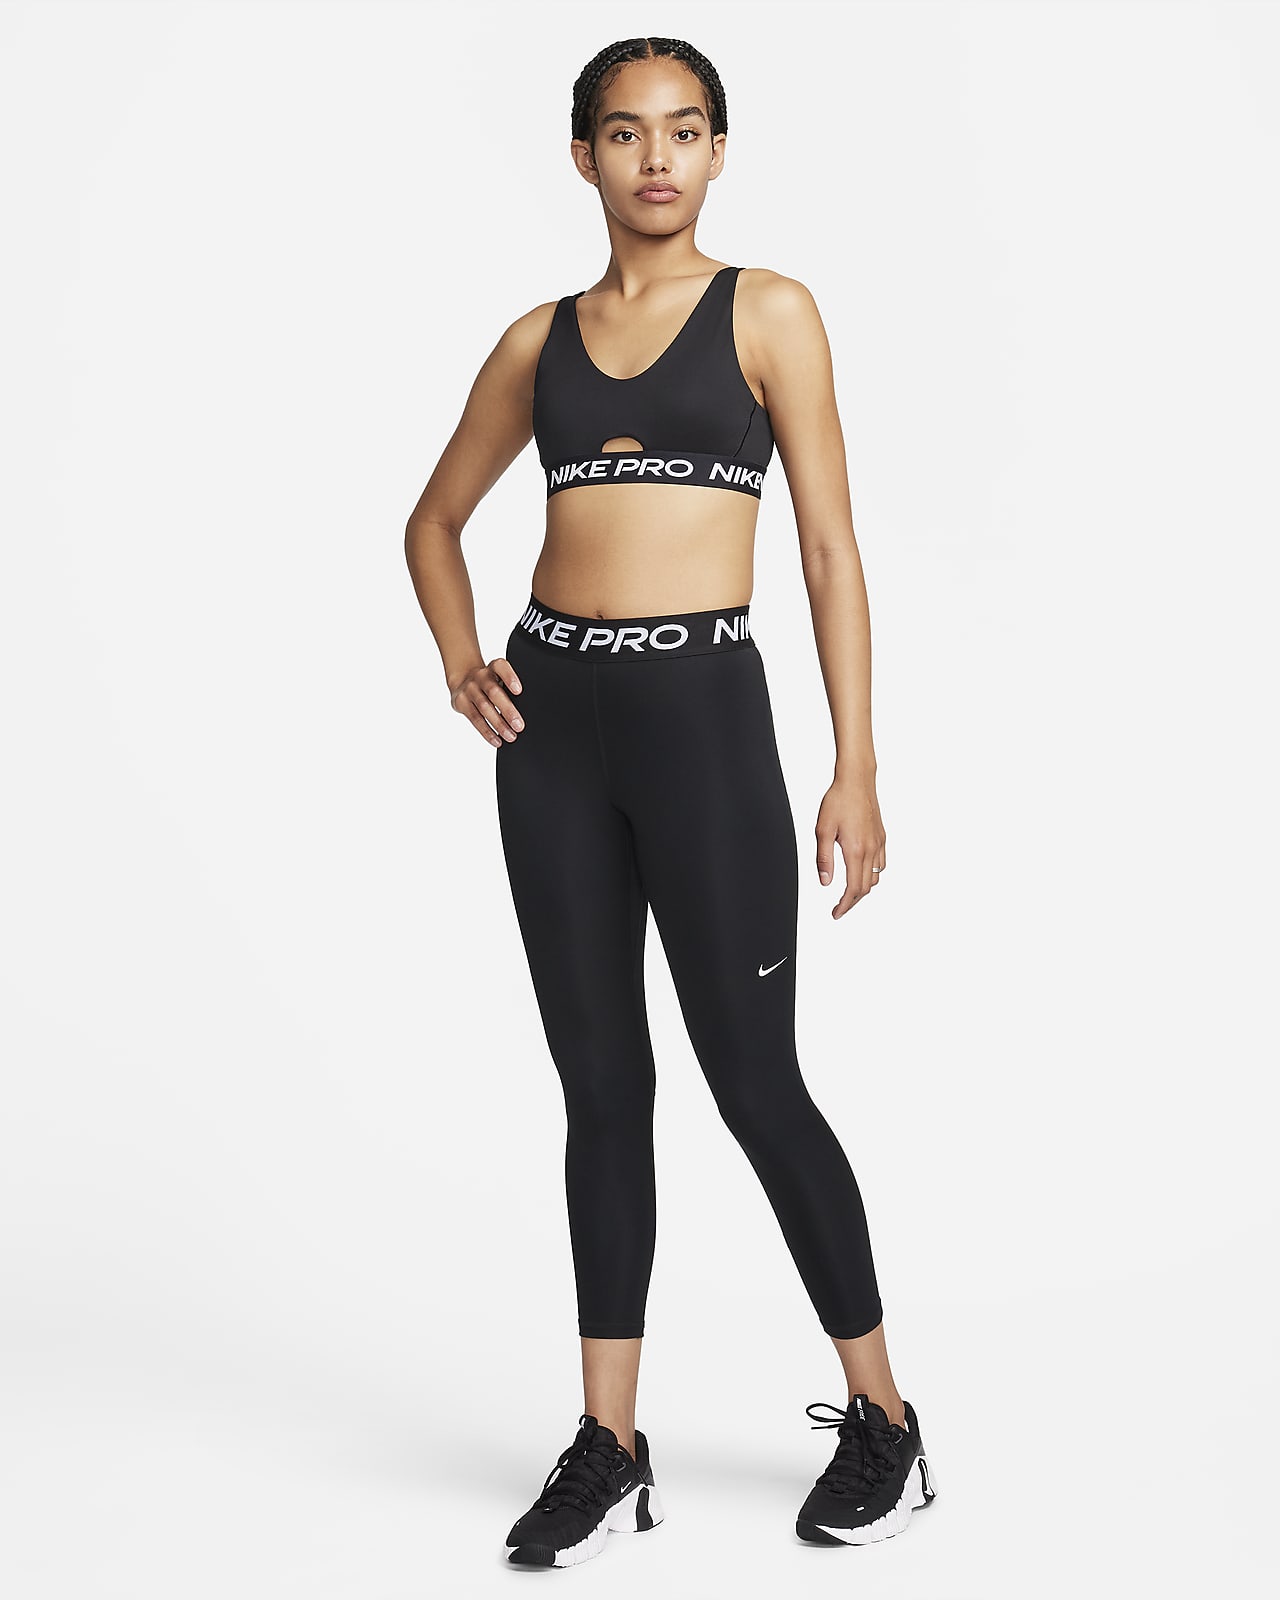 Nike Indy Plunge Cutout Bra - XL - BANDIER  Cutout bra, Padded sports bra,  Cut out design